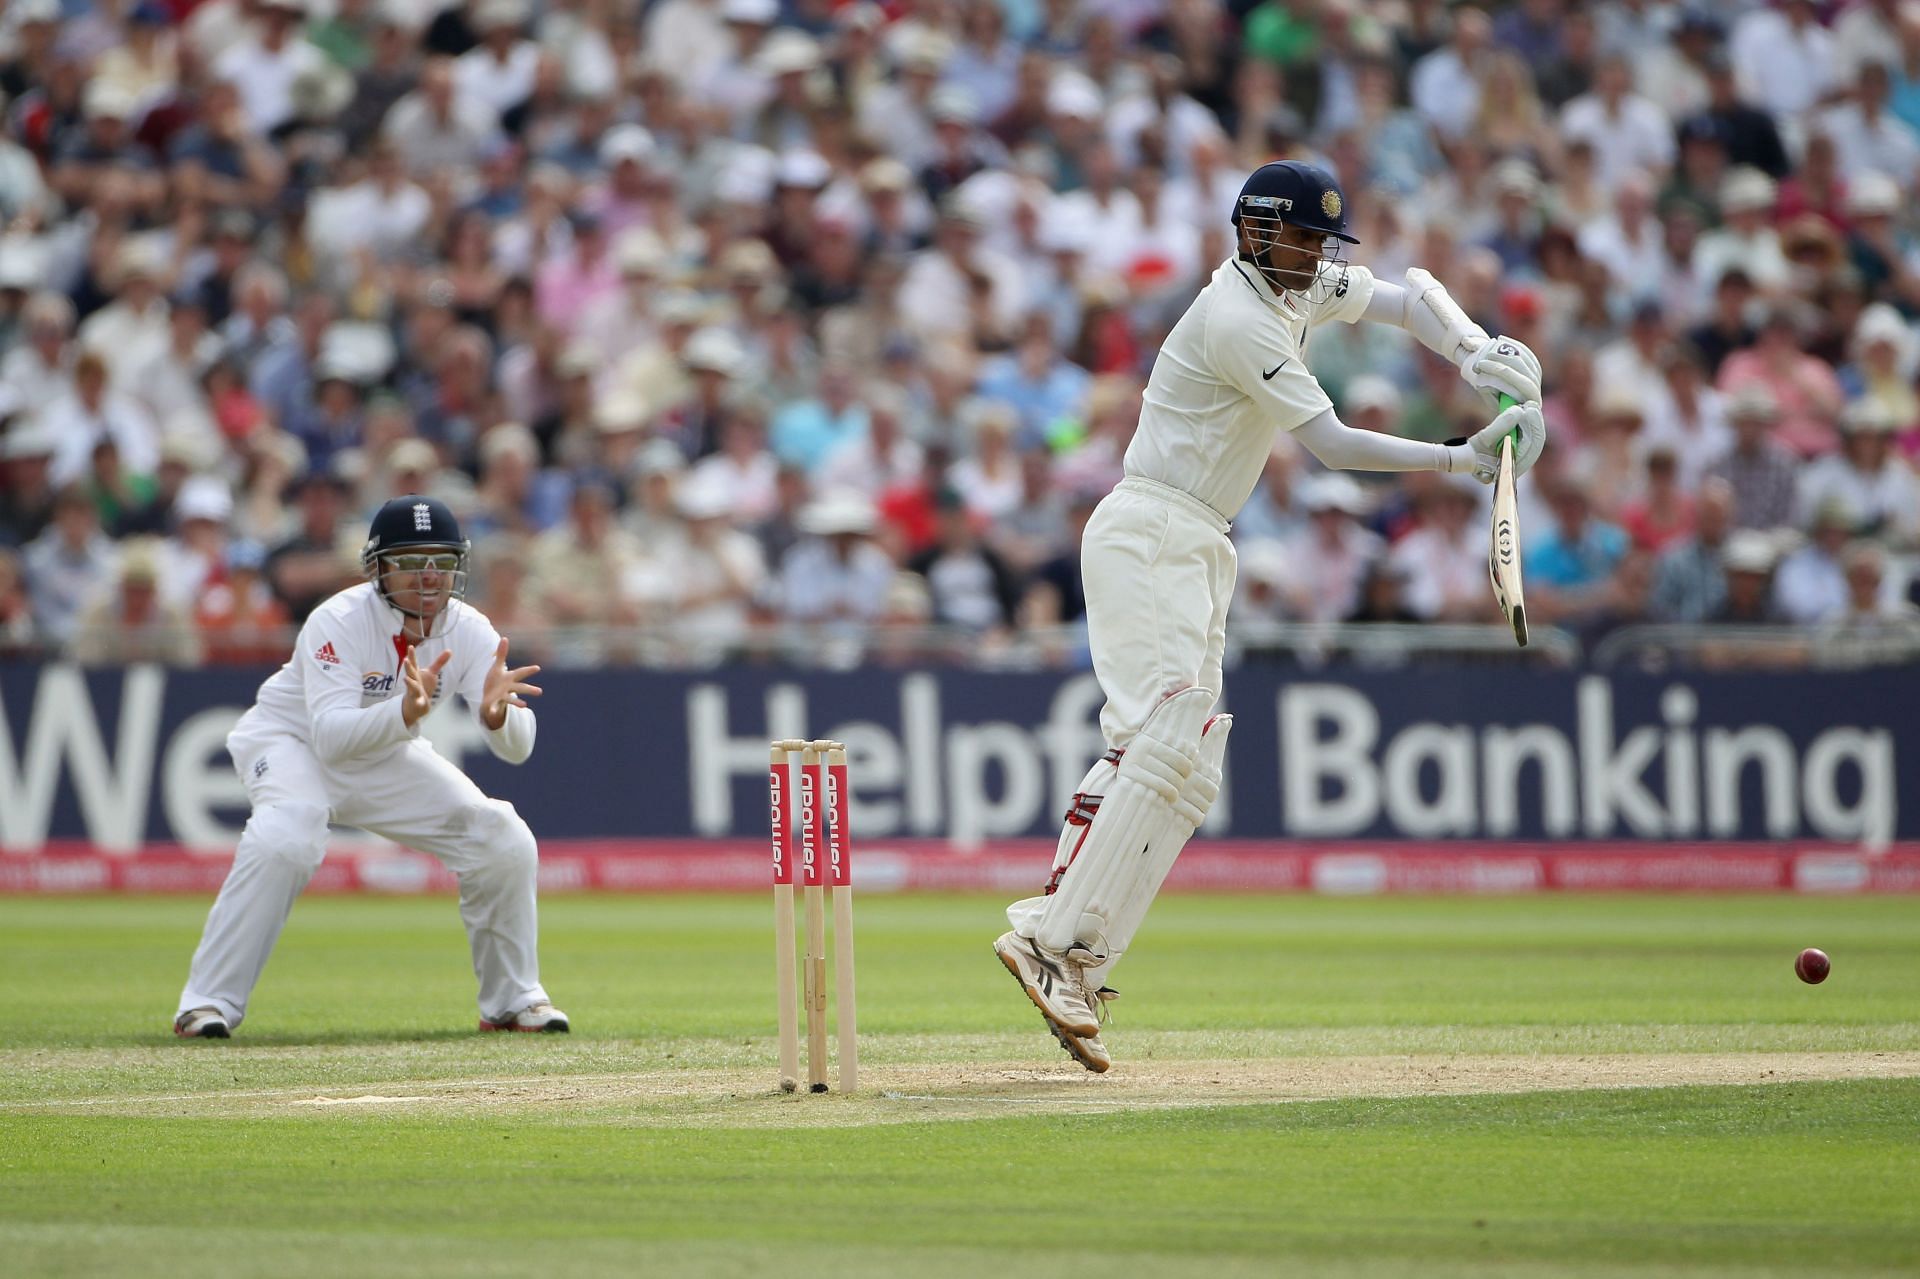 Rahul Dravid retired from Test cricket, a year earlier than Sachin Tendulkar. 